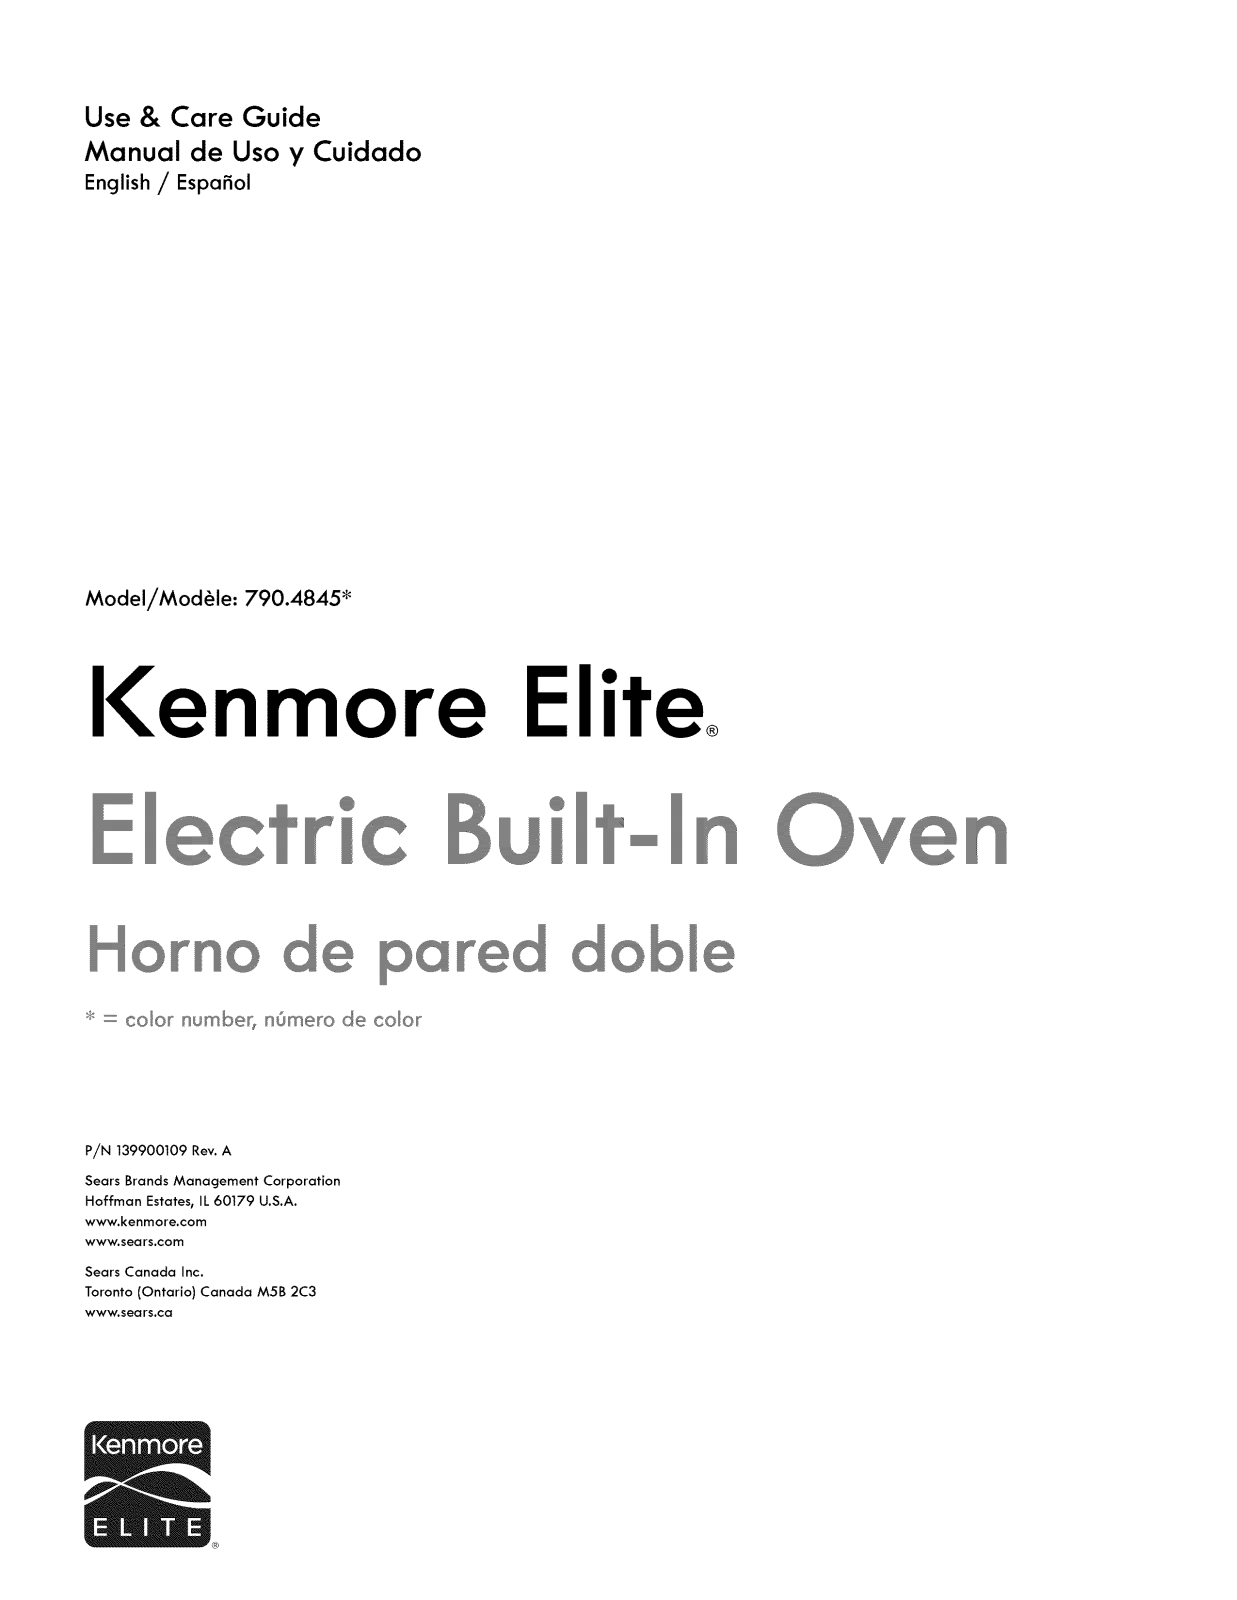 Kenmore Elite 79048459411, 79048459410, 79048453411, 79048453410, 79048452411 Owner’s Manual